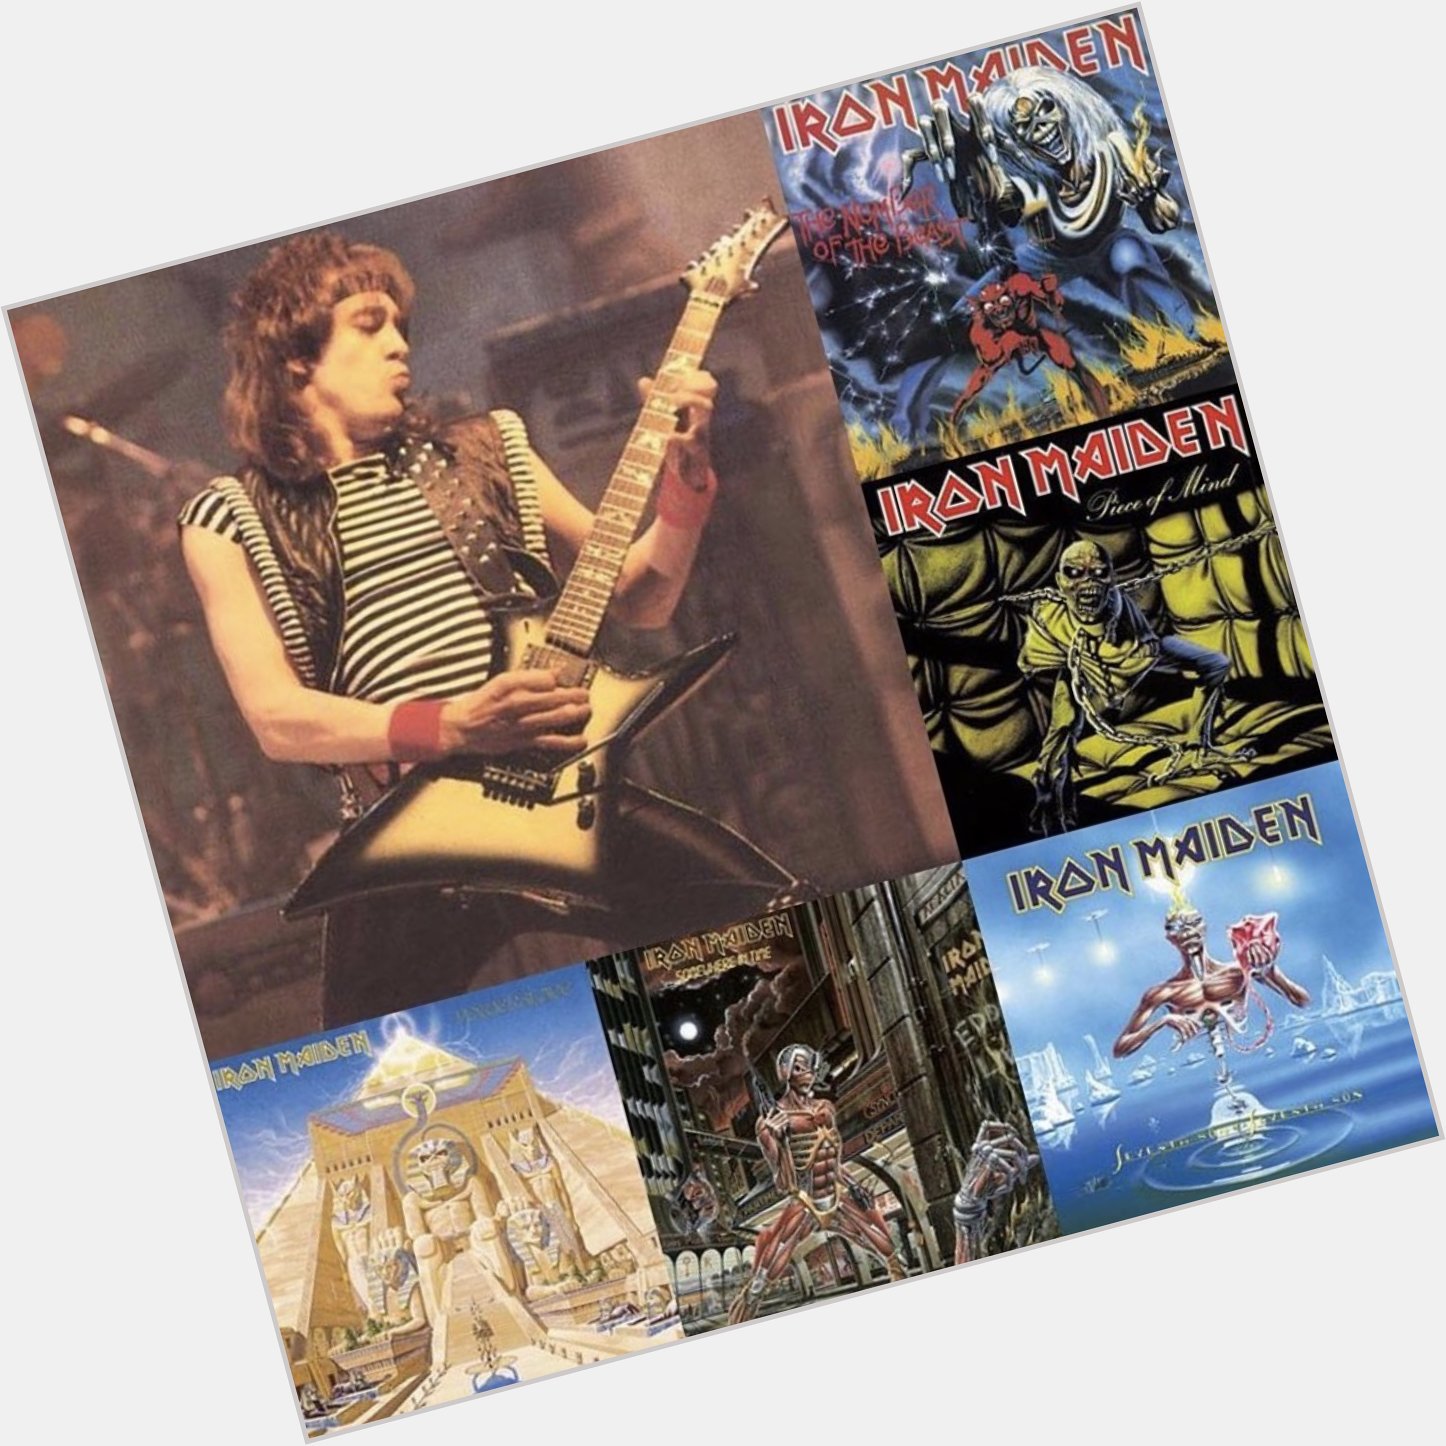 Happy 64th Birthday to Iron Maiden guitarist Adrian Smith! 